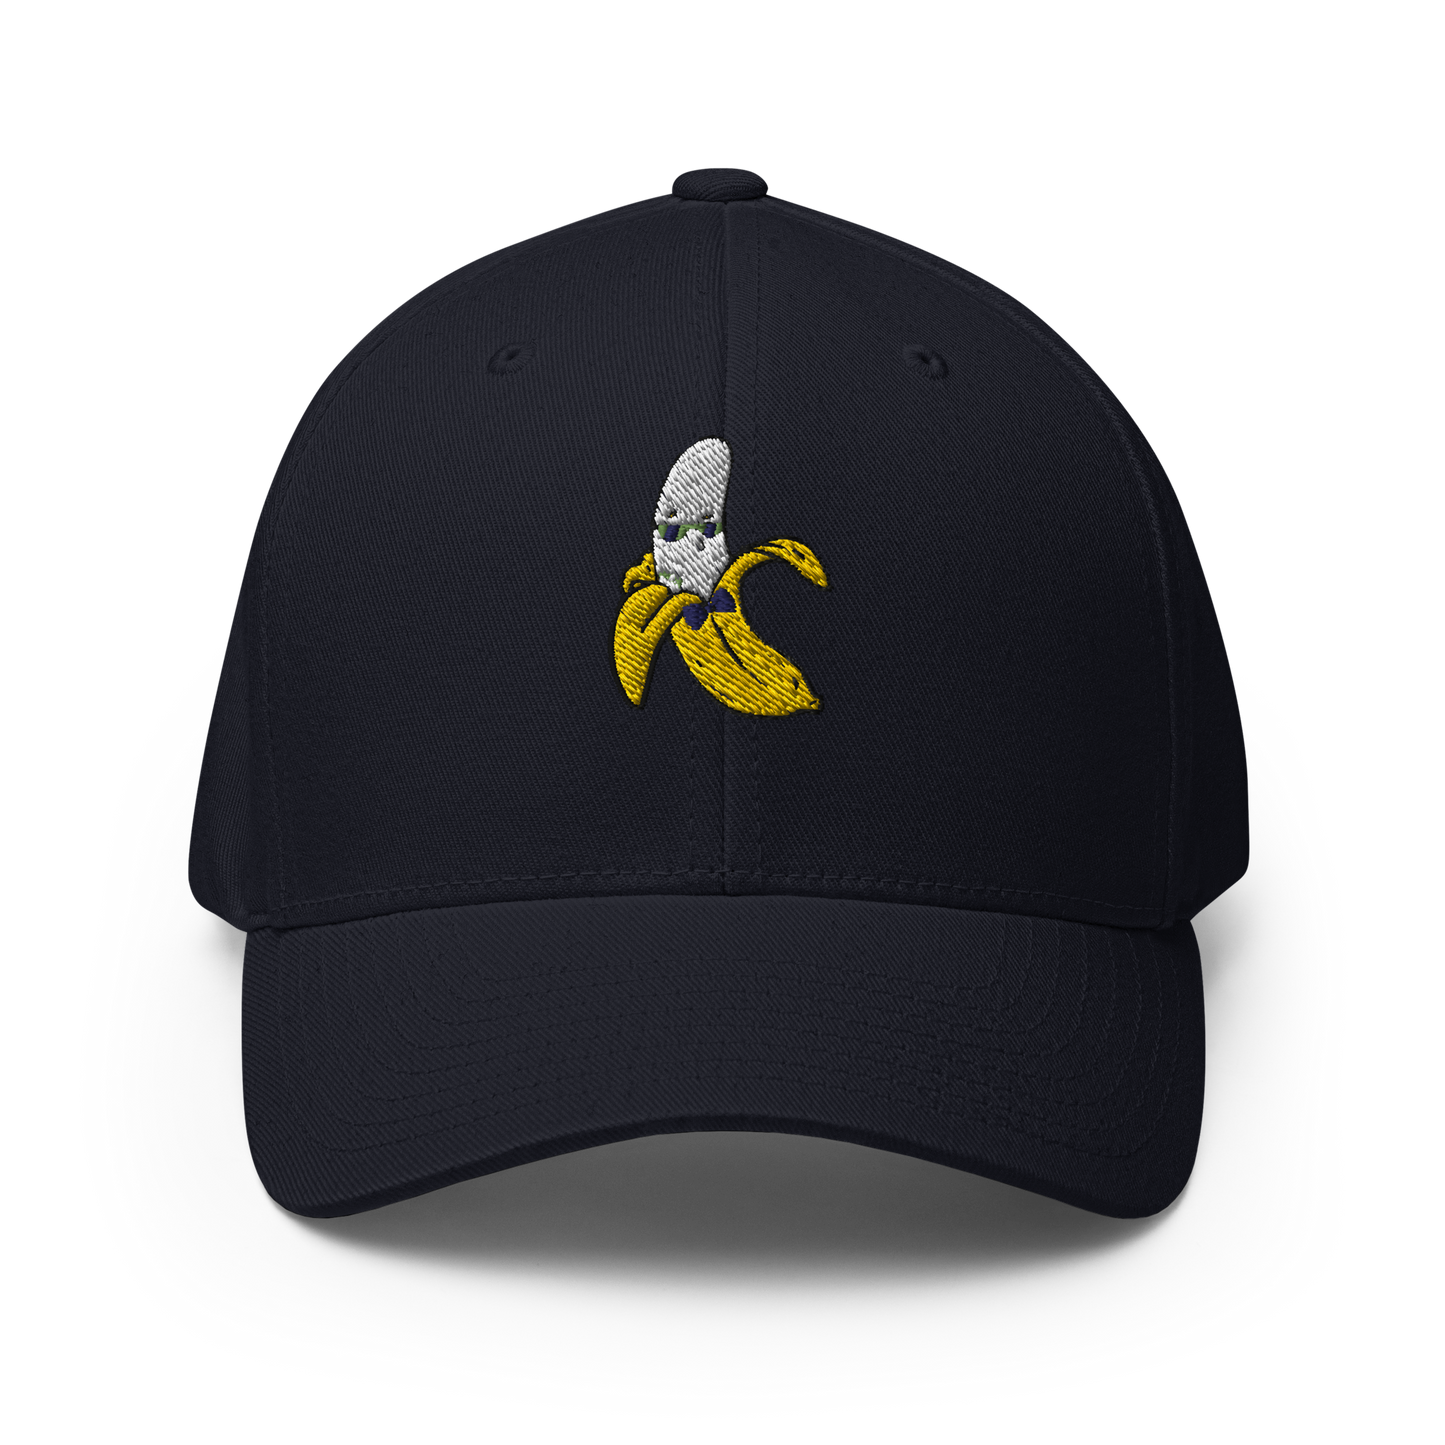 Banana Structured Twill Cap